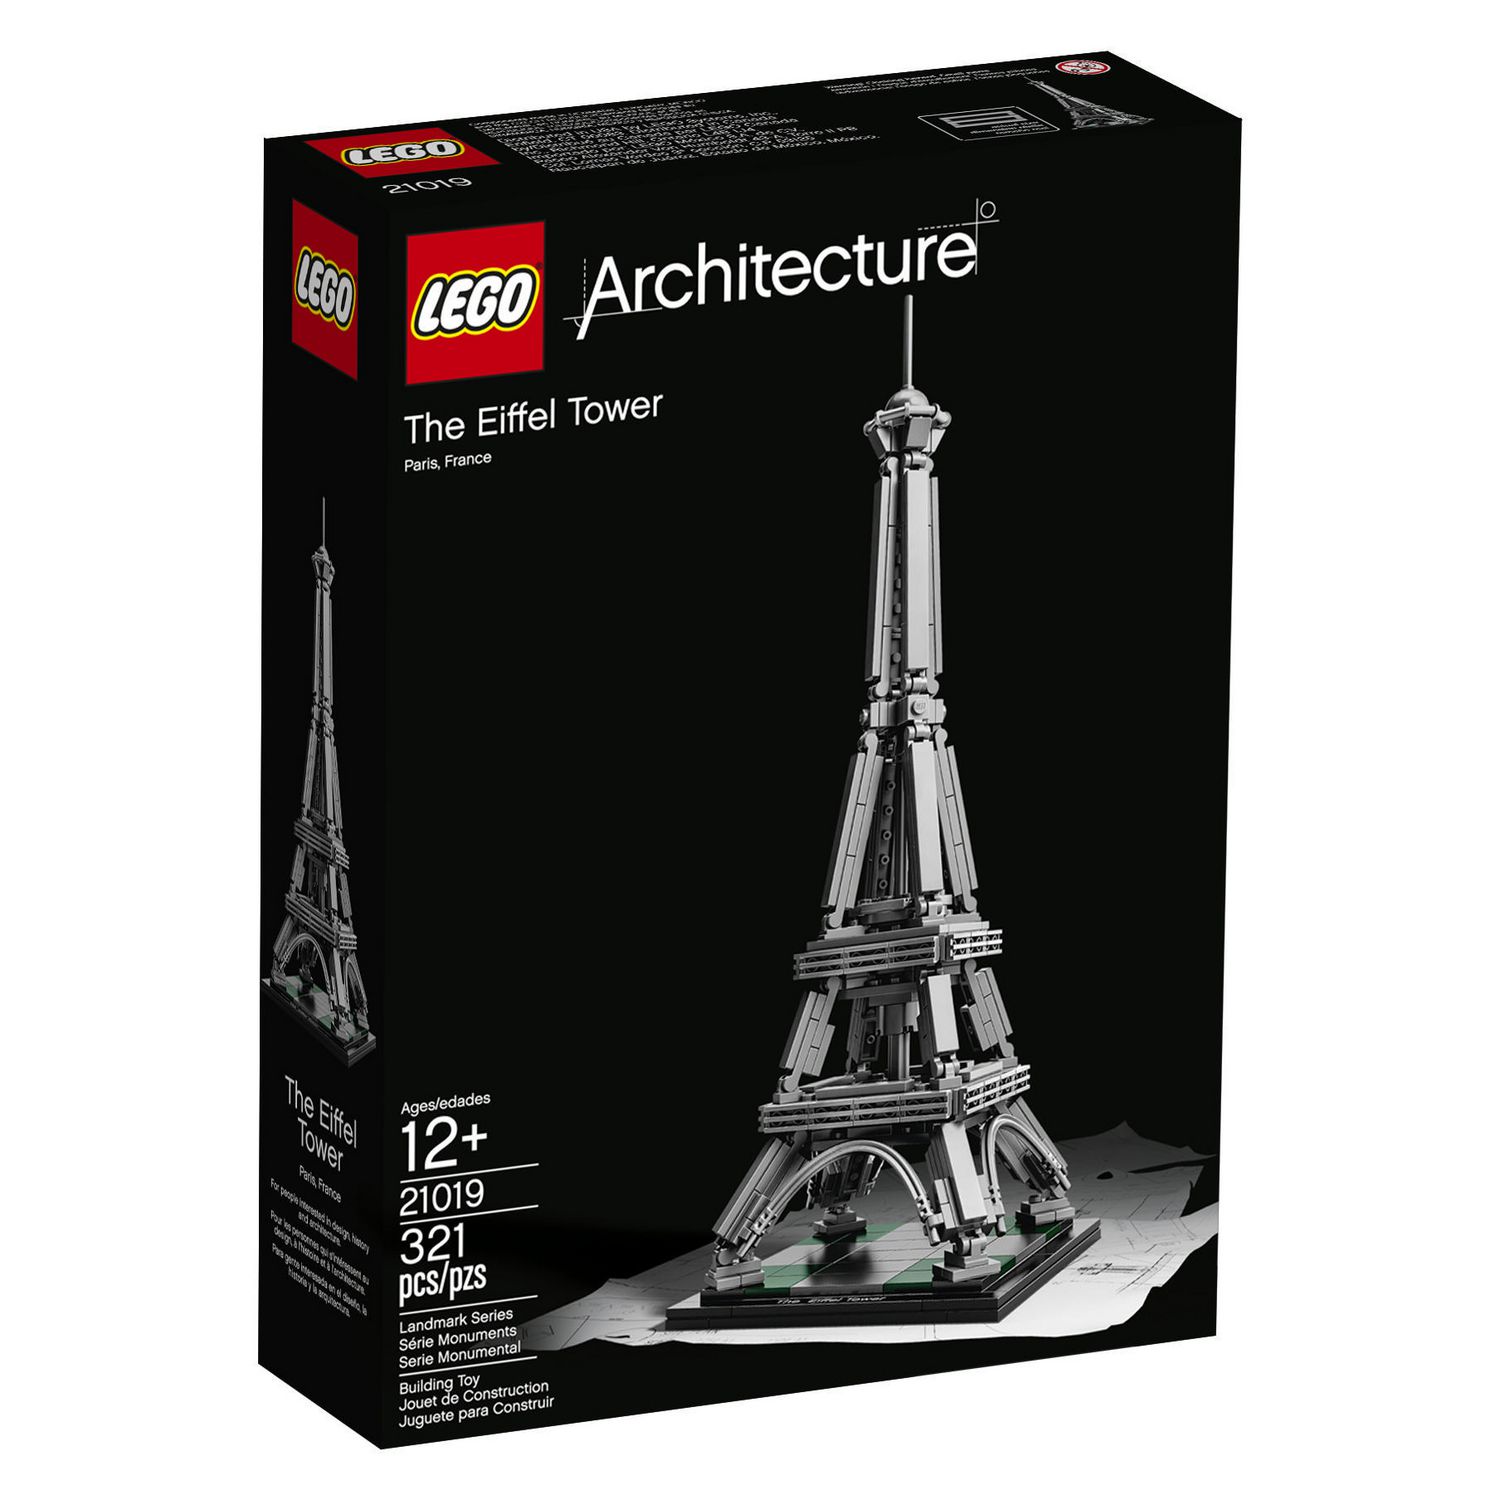 LEGO® Architecture - The Eiffel Tower Landmark Series Building Toy